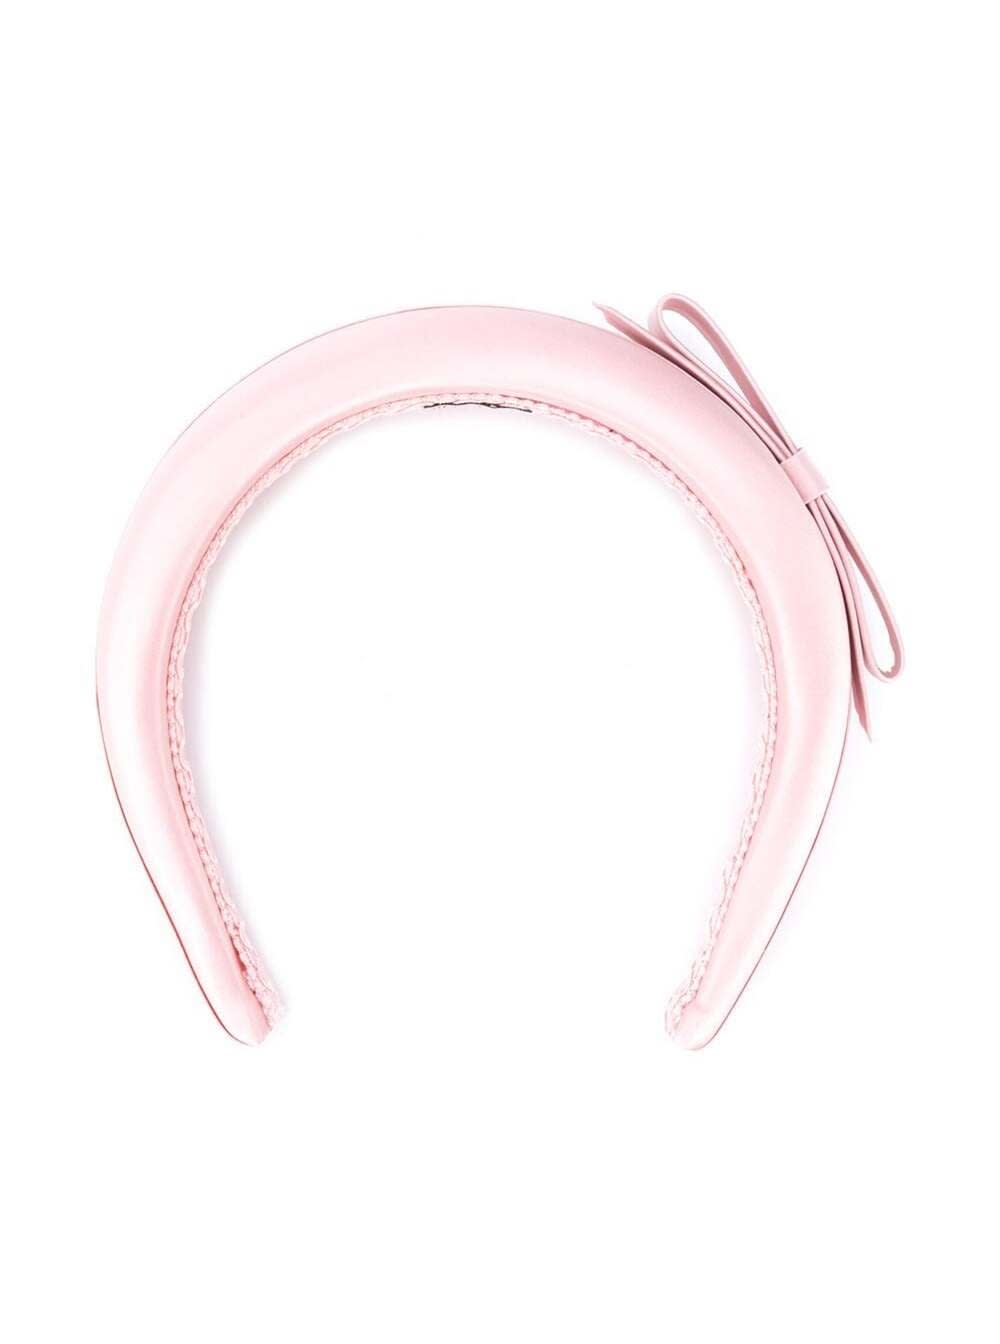 RED Valentino Pink Satin Headband With Bow